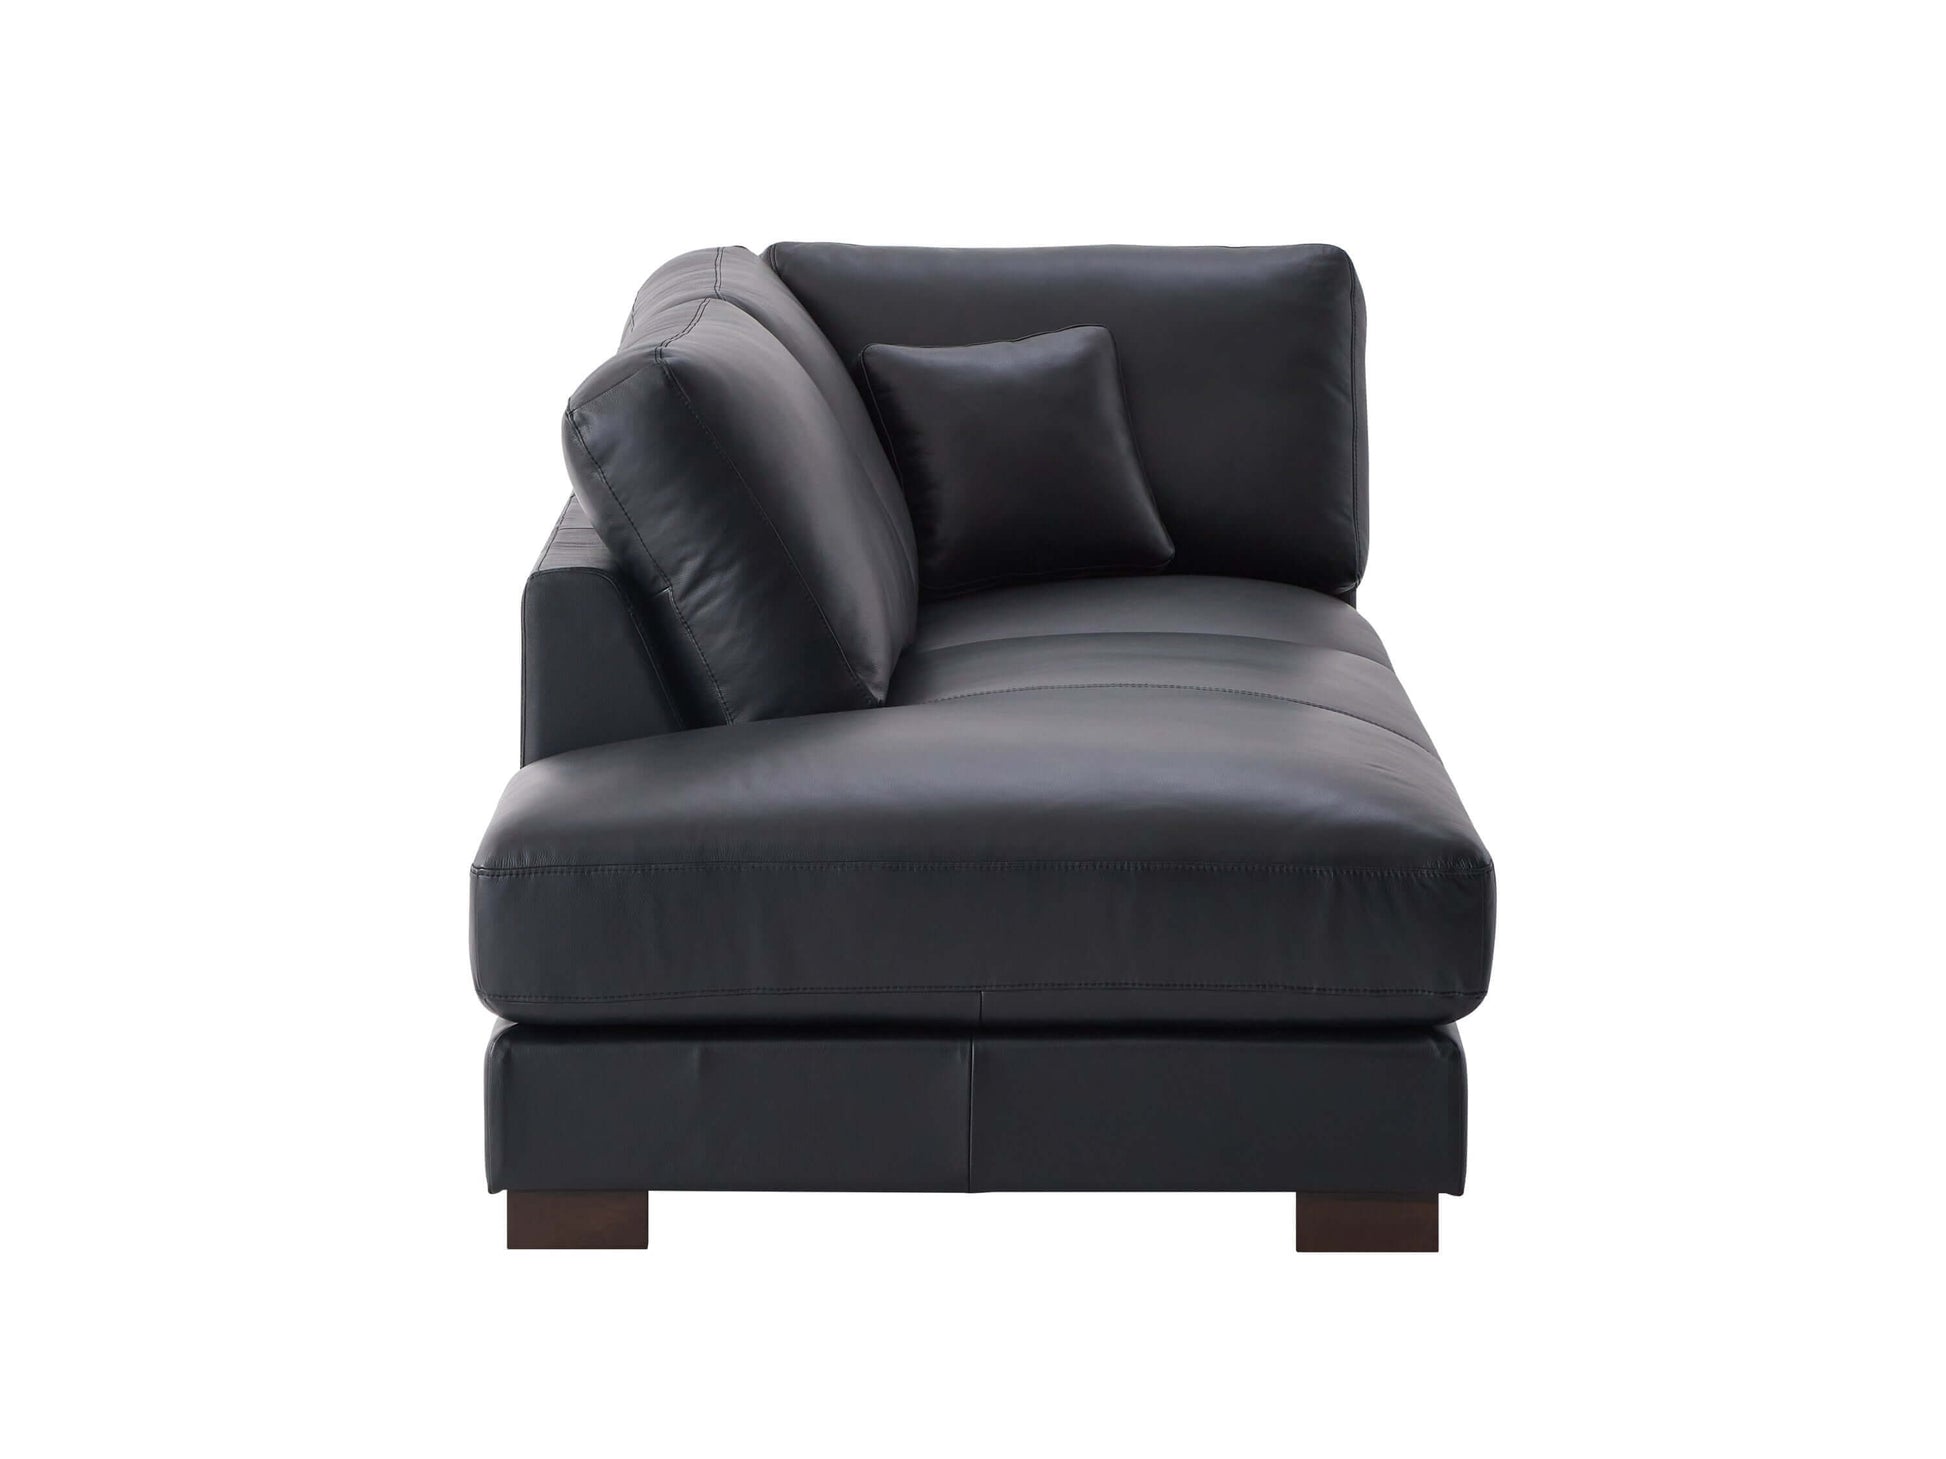 Geralyn Sectional Corner Chaise Sofa w/2 Throw Pillows, Genuine Leather Black - Revel Sofa 